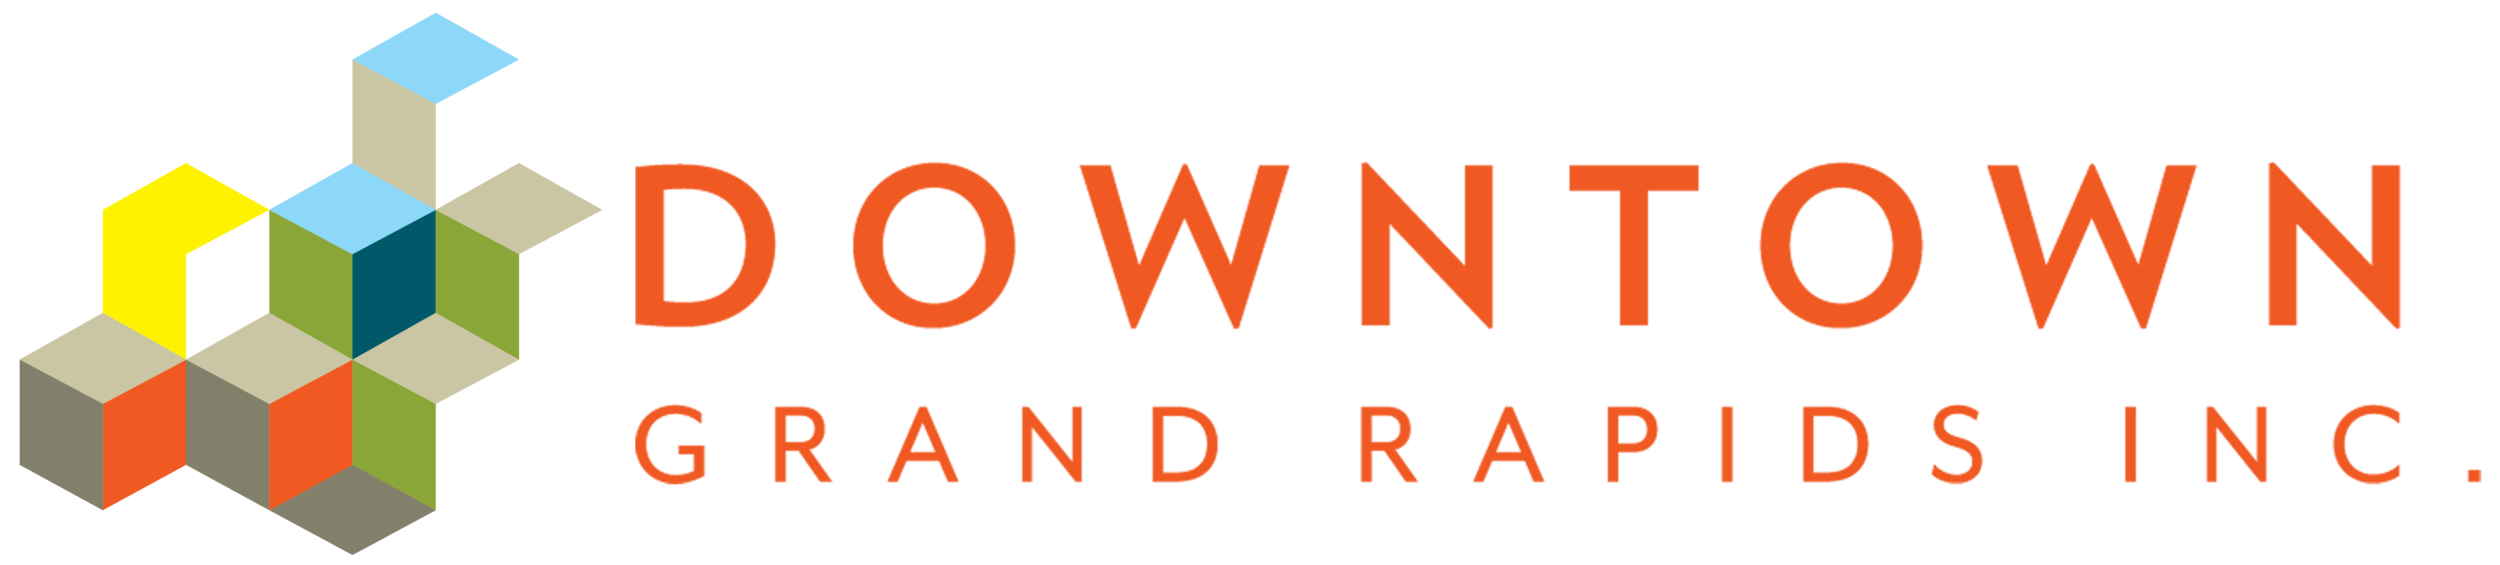 Downtown-Grand-Rapids-Inc-logo-Final.png